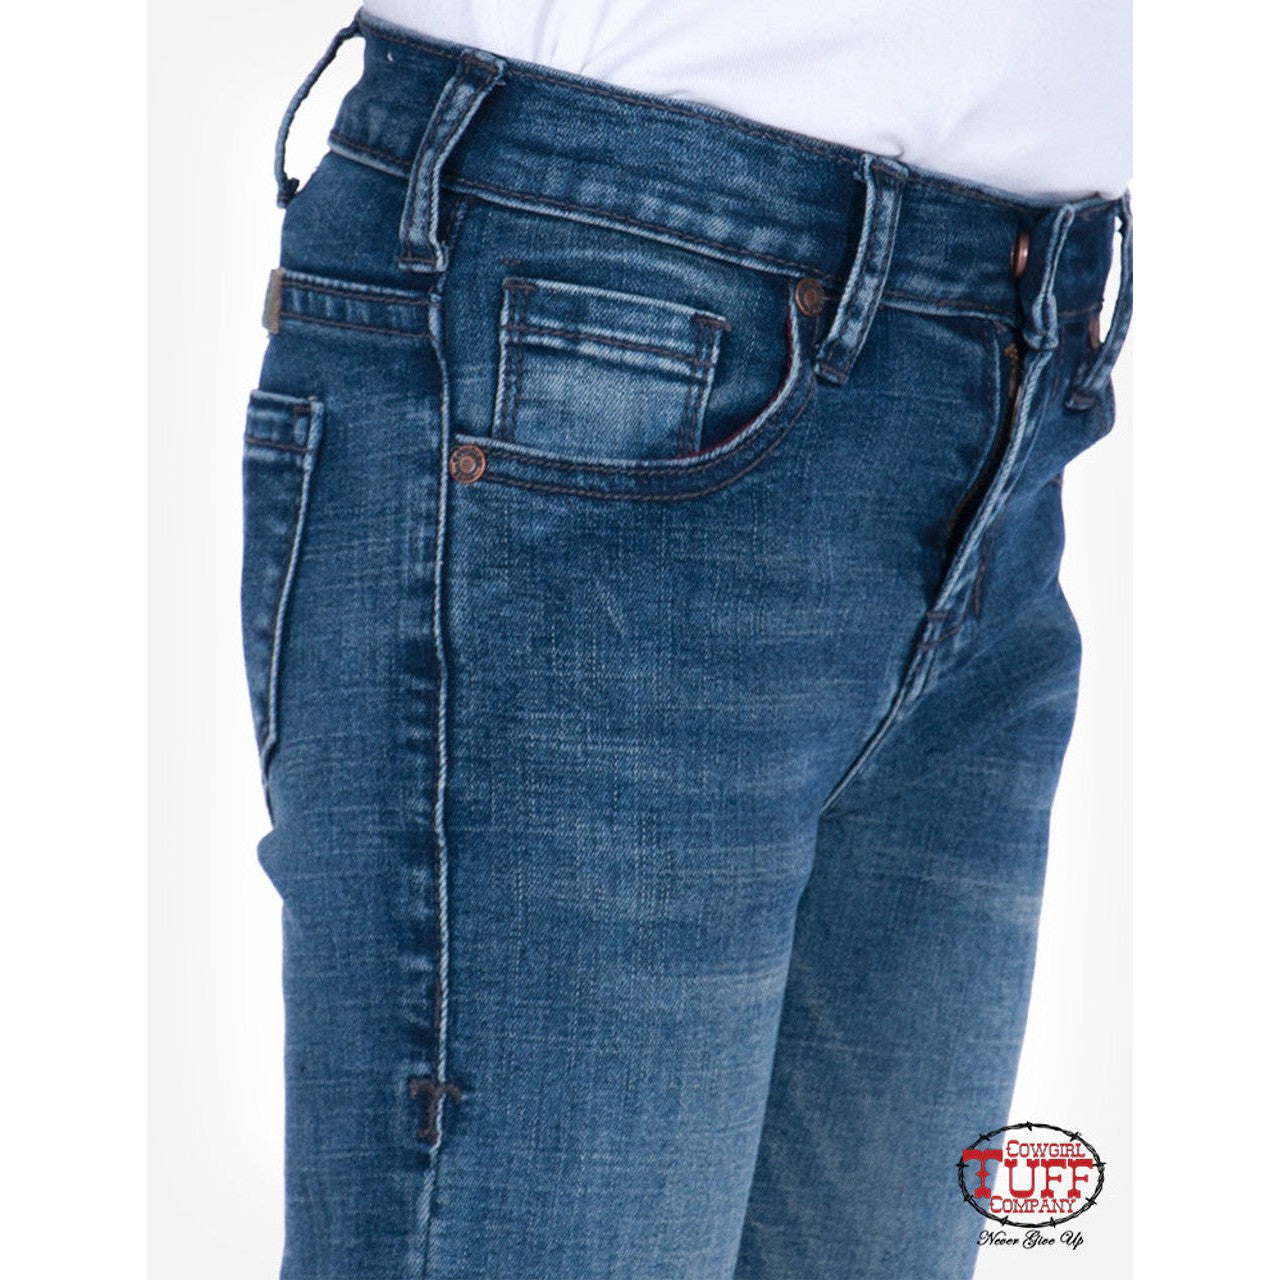 Cowgirl Tuff Girl's Trouser Jeans - Medium Wash